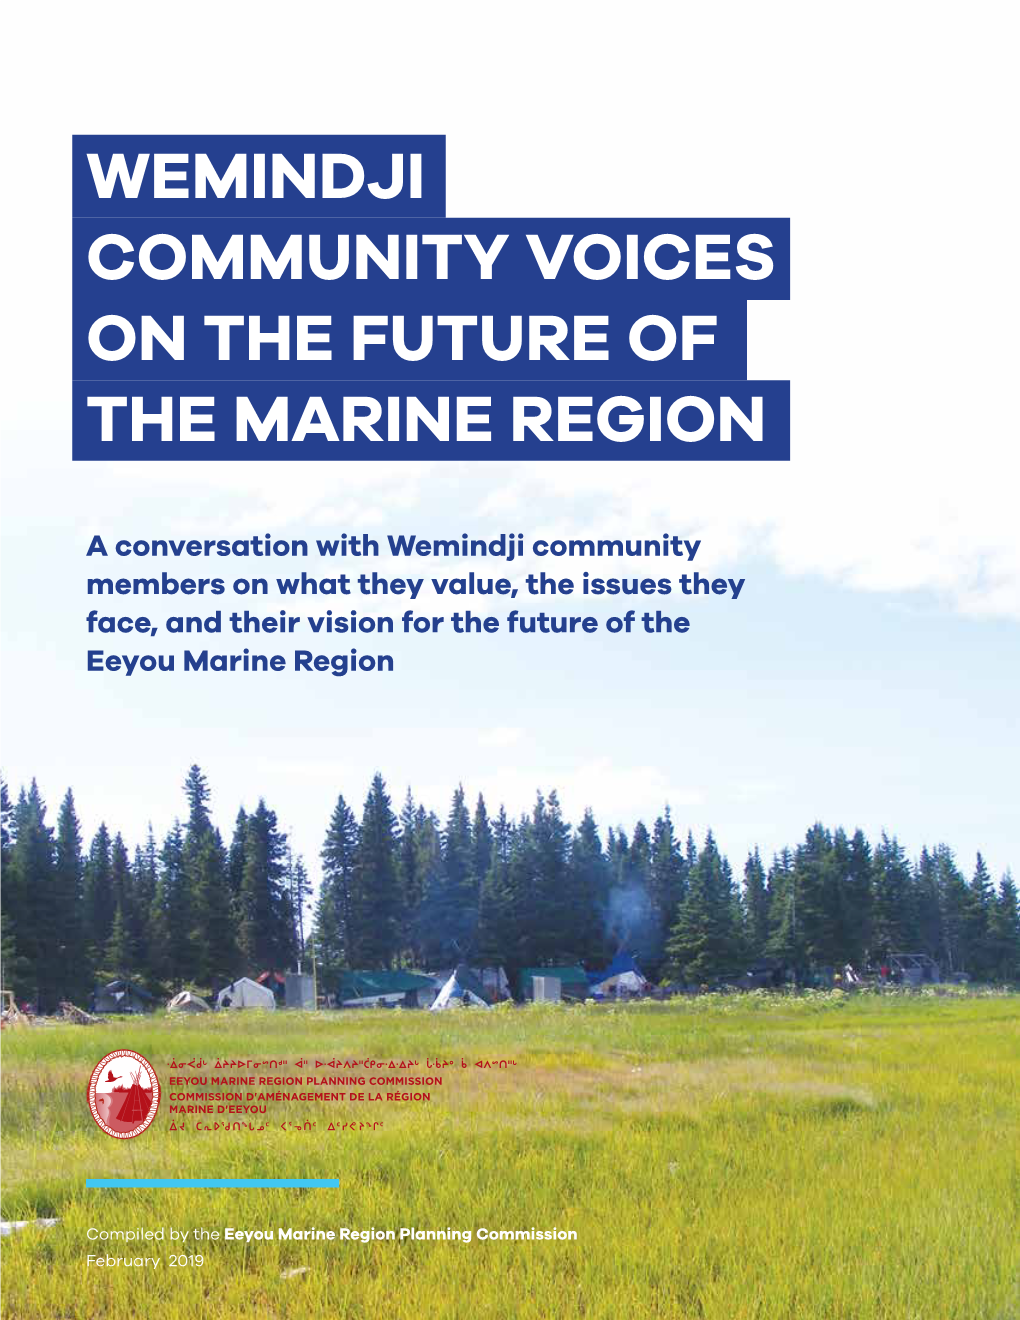 Wemindji Community Voices on the Future of the Marine Region